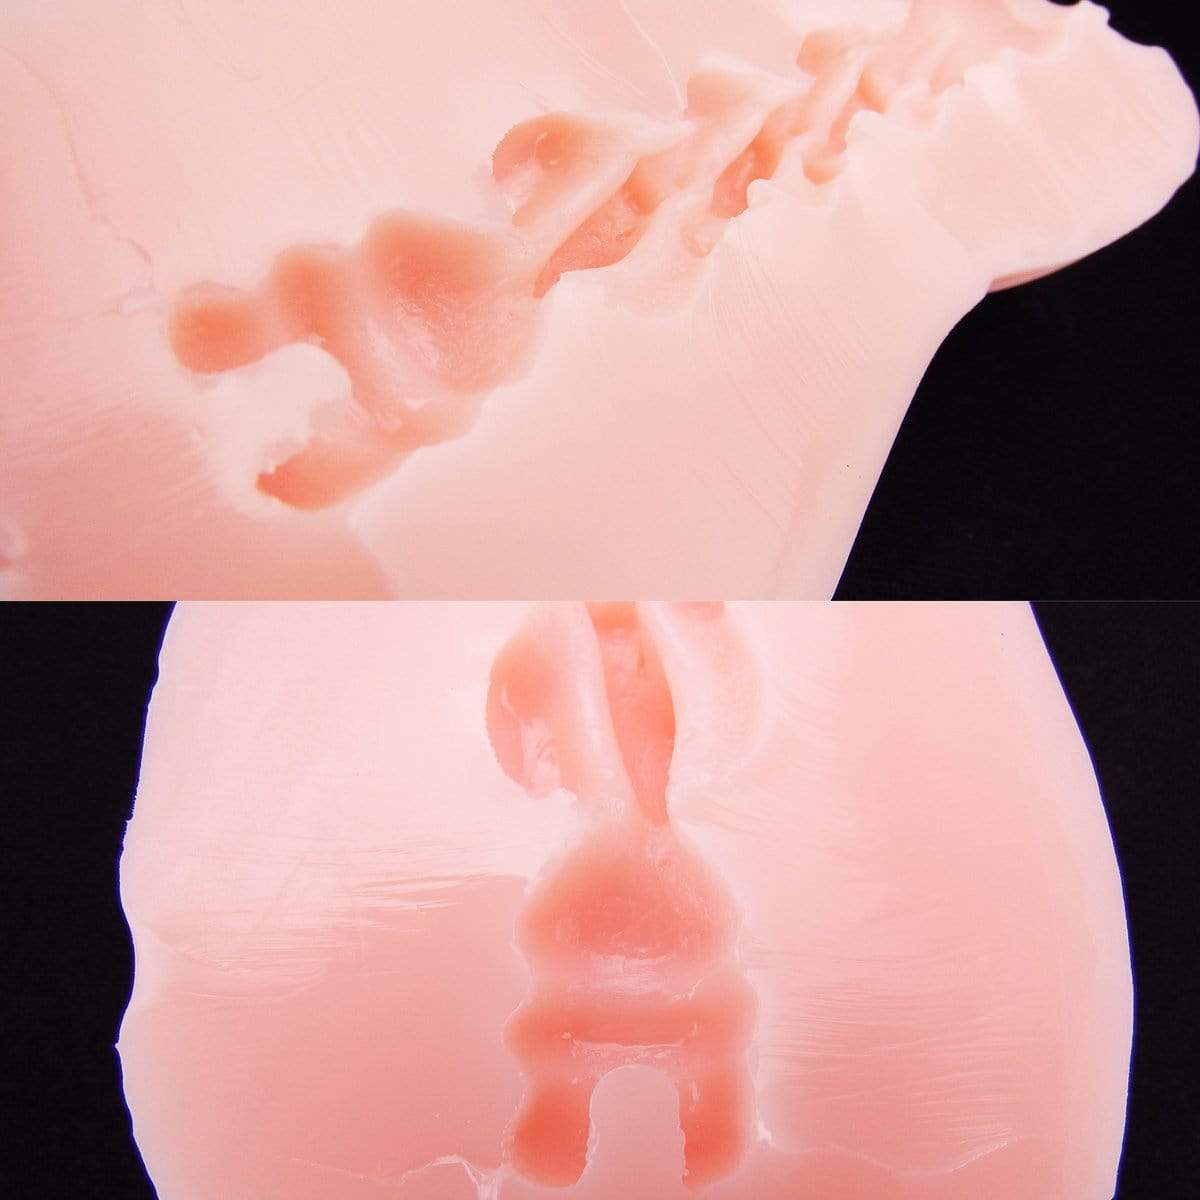 DNA - Milking Hole Screw Onahole (Beige) -  Masturbator Vagina (Non Vibration)  Durio.sg